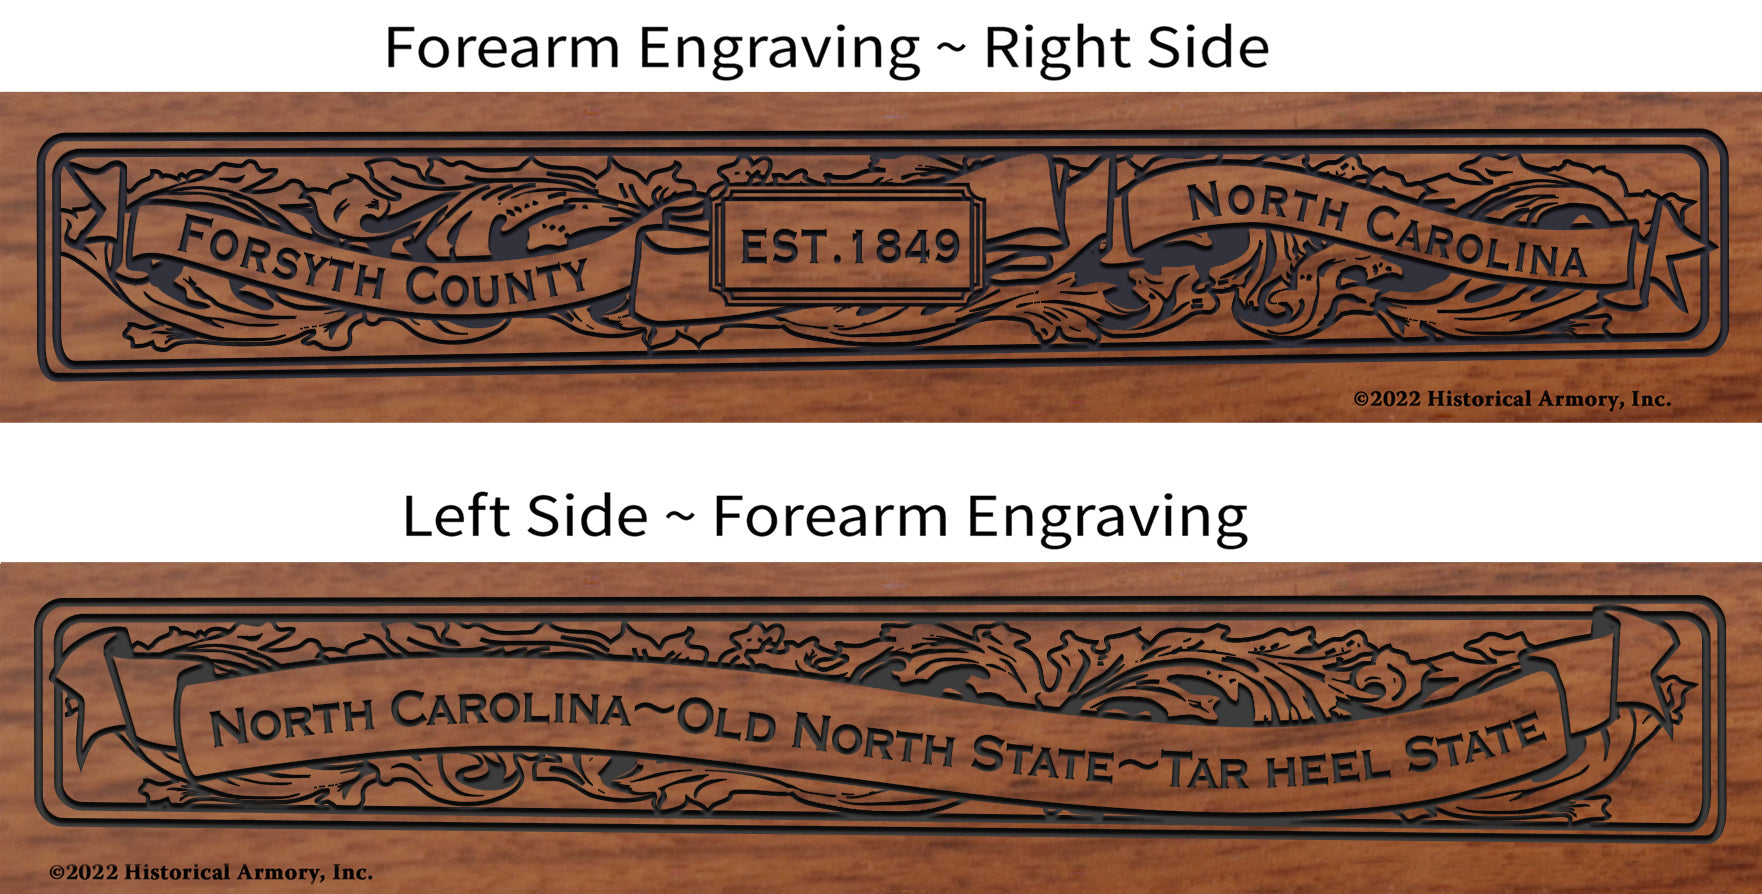 Forsyth County North Carolina Engraved Rifle Forearm